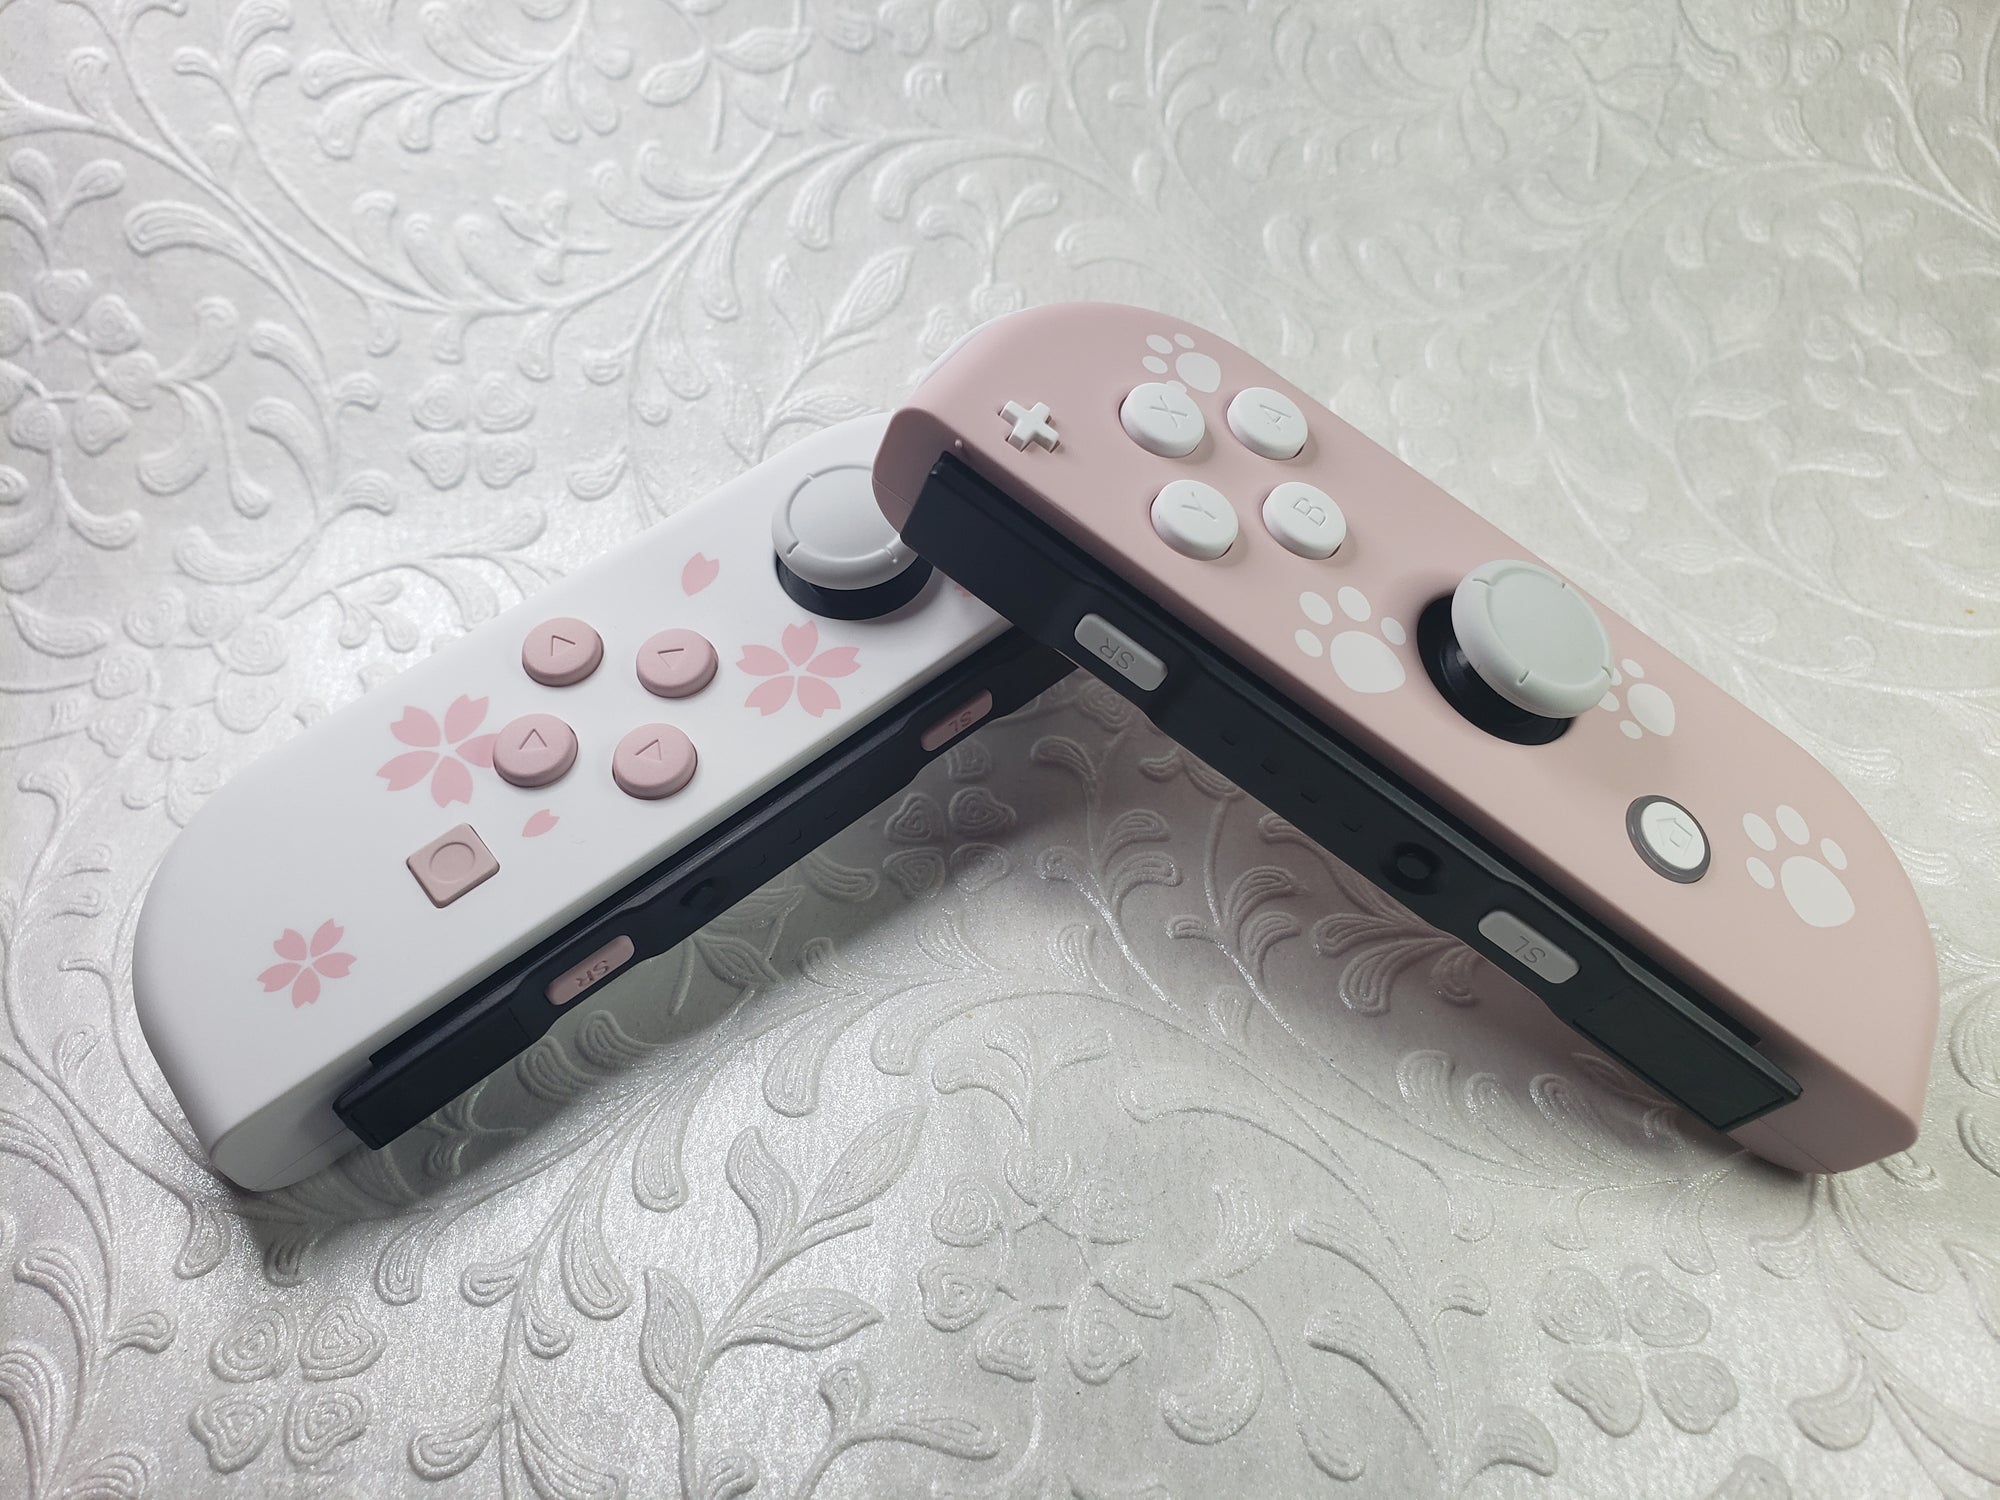 Paws on Sakura Pink Soft Touch - Customizable Options - OEM Nintendo Joy-Cons